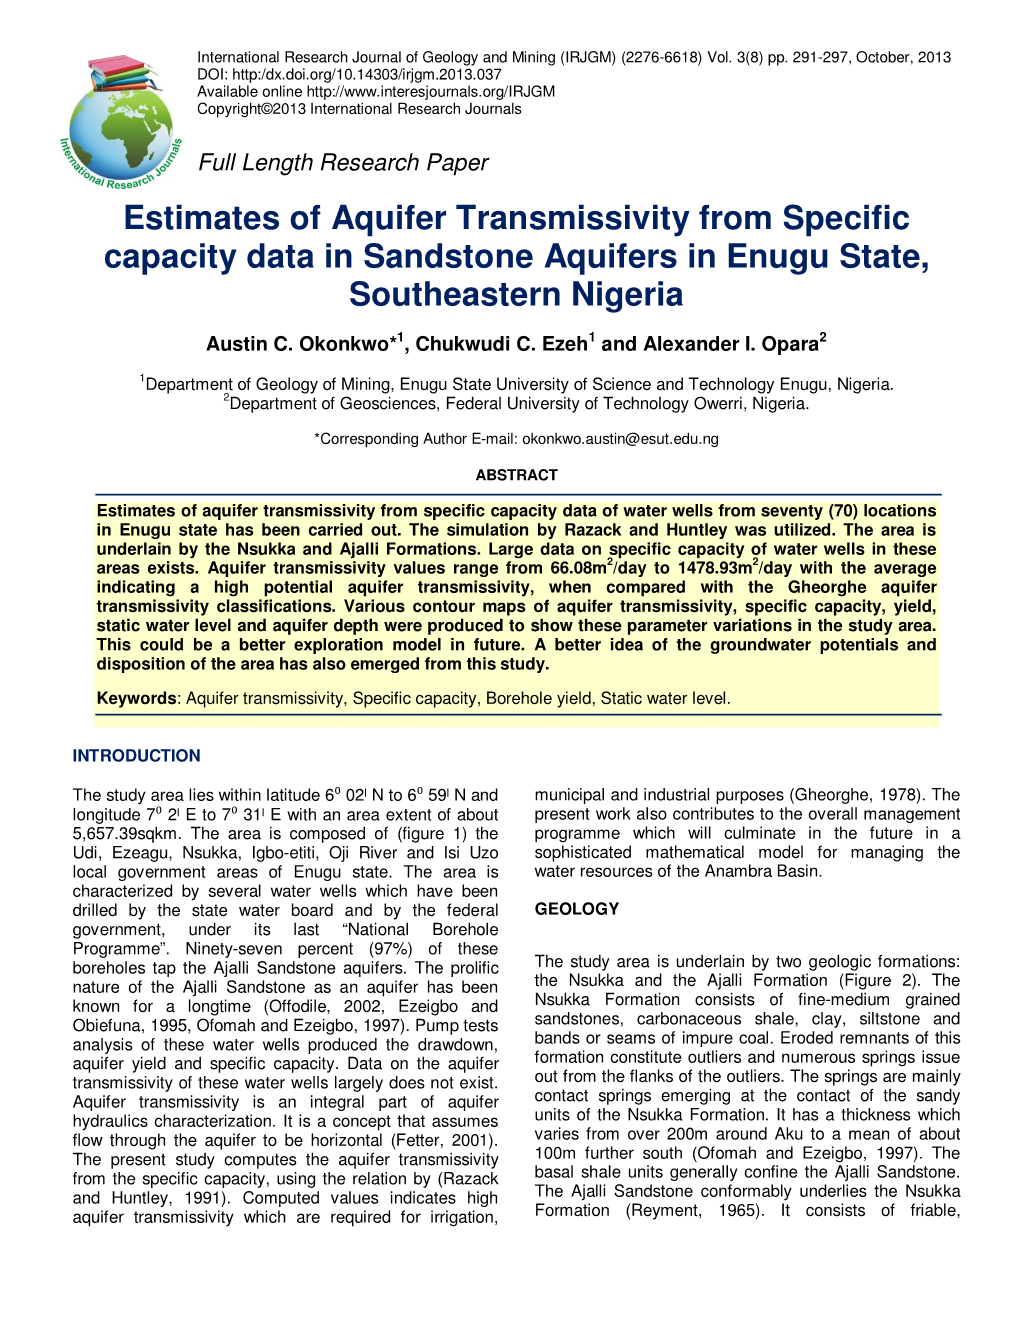 Estimates of Aquifer Transmissivity from Specific Capacity Data in Sandstone Aquifers in Enugu State, Southeastern Nigeria